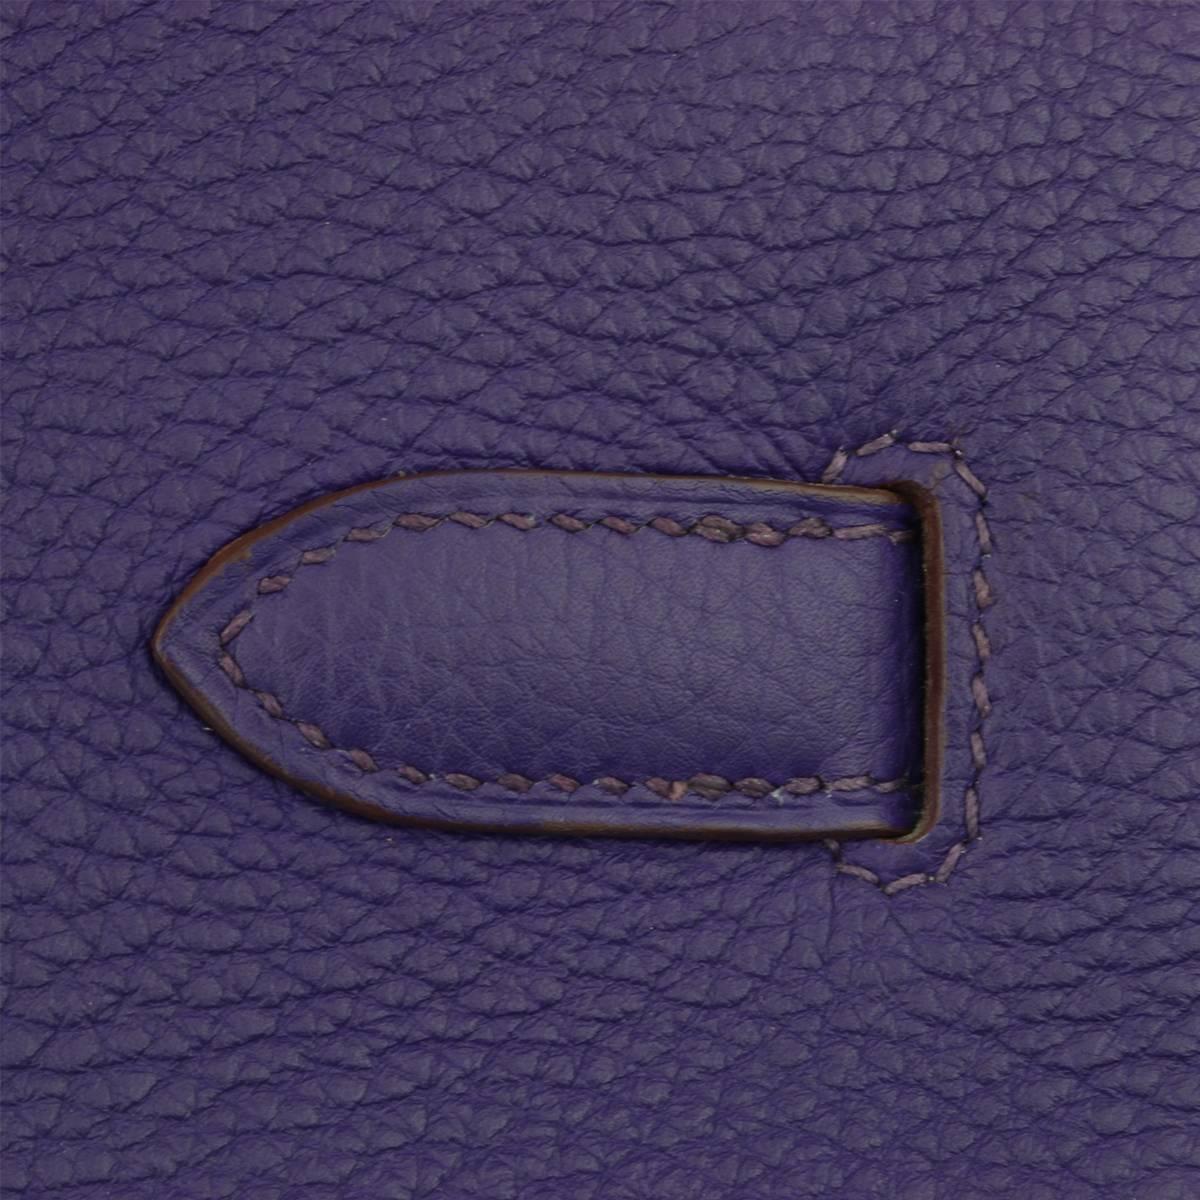 Hermès Birkin 35cm 9k Iris Togo Leather with Brushed Palladium Hardware Stamp P 8